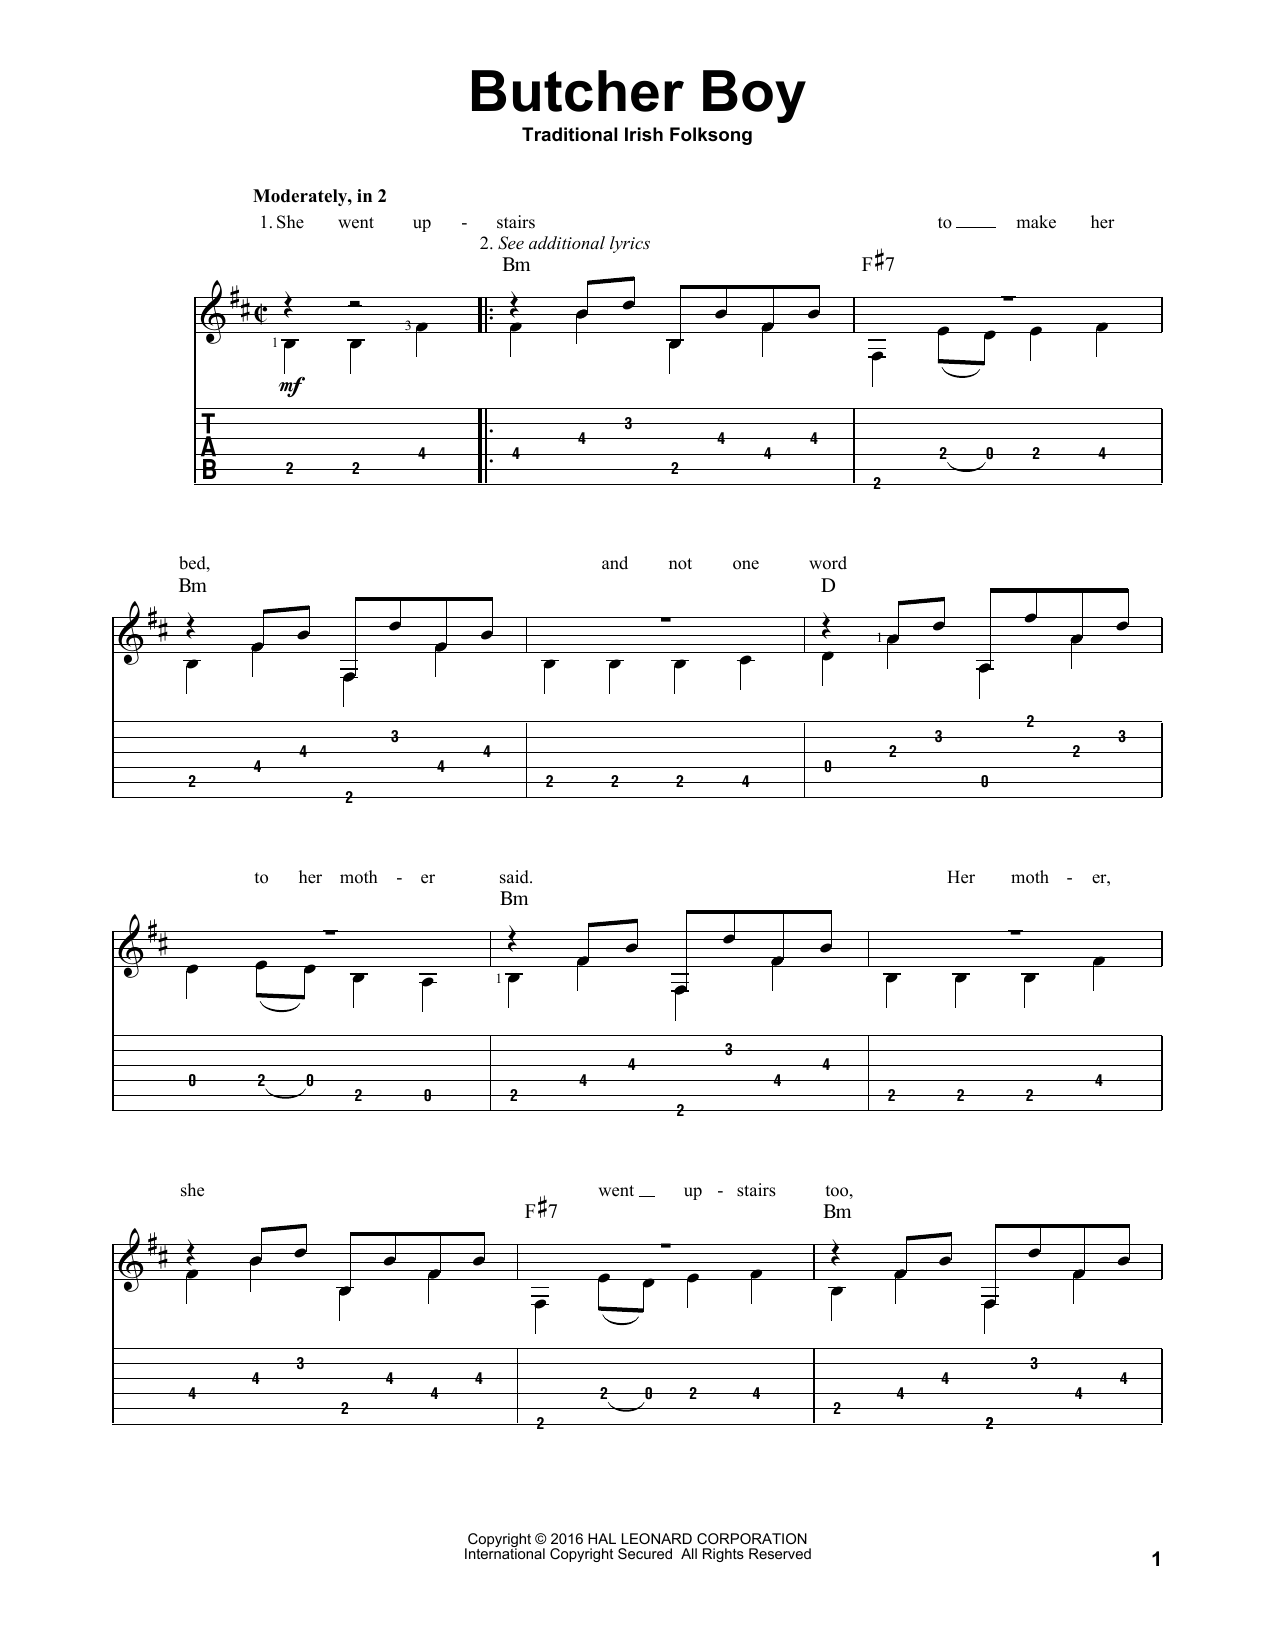 Traditional Irish Folk Song Butcher Boy Sheet Music Notes & Chords for Guitar Tab - Download or Print PDF